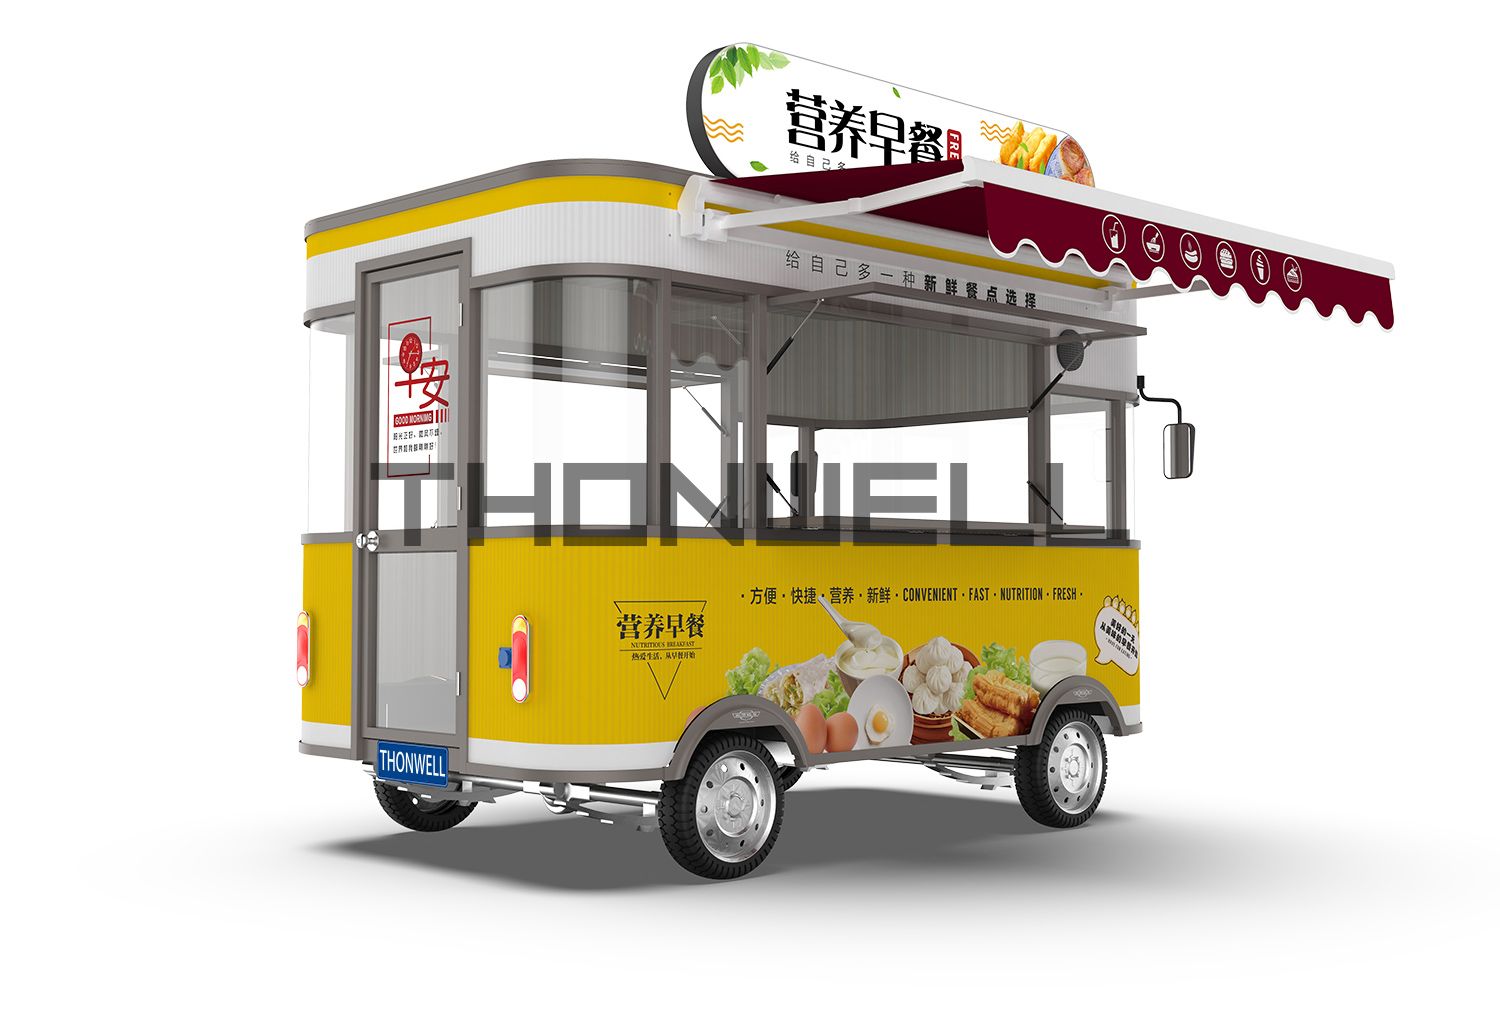 Food truck breakfast cart of Kuck-34